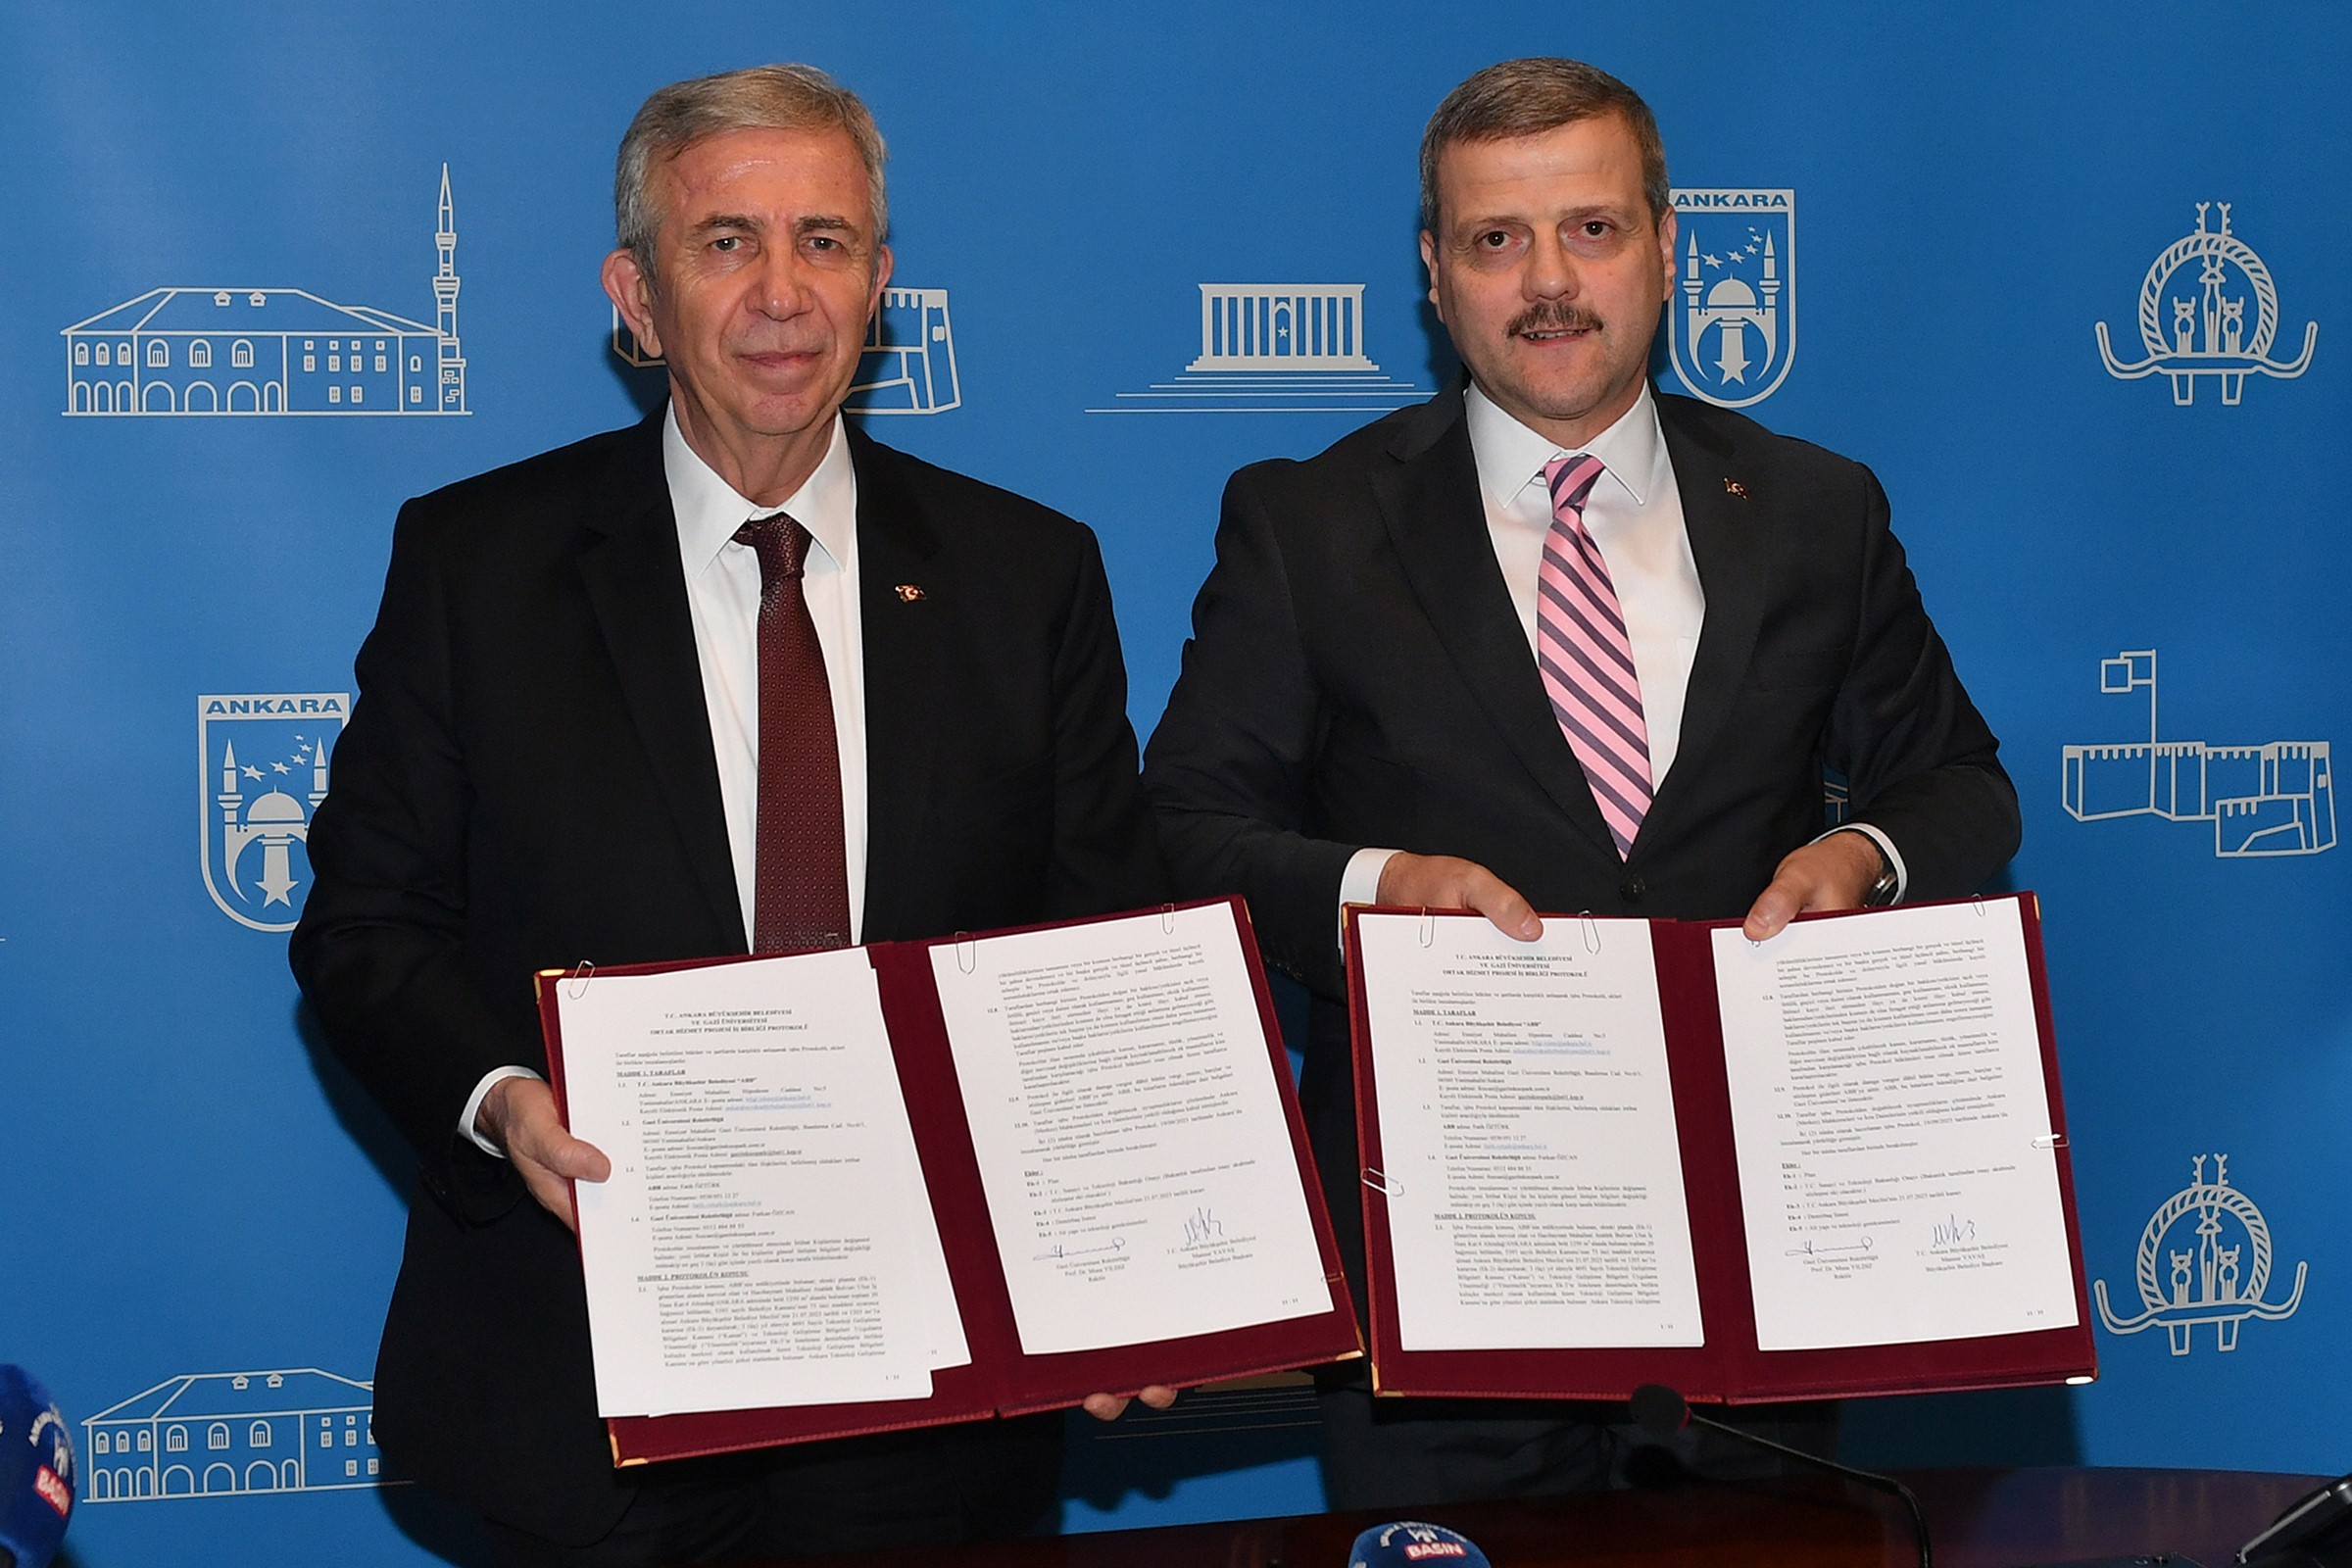 abb-ve-gazi-universitesi-arasinda-ulus-teknoloji-merkezi-icin-protokol-imzalandi (2)